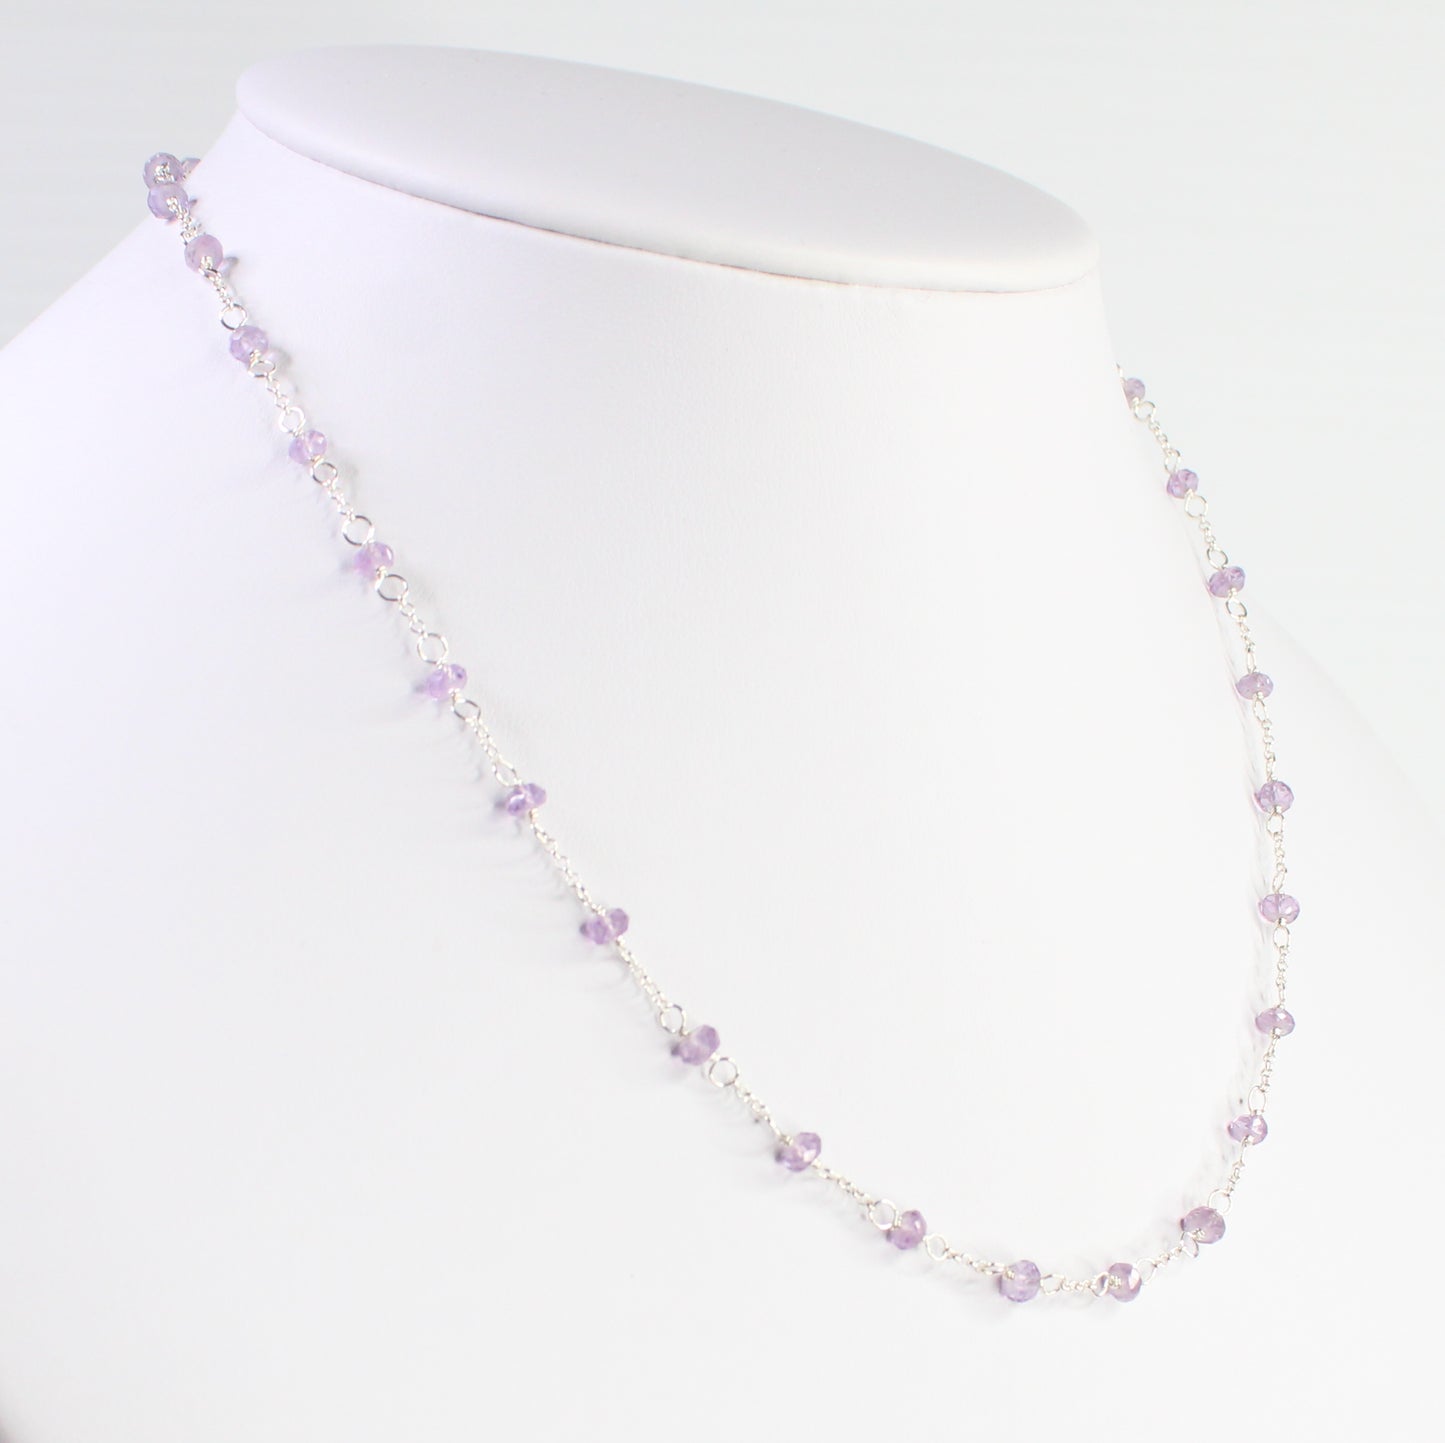 Lavender Amethyst Gemstone Satellite Chain Necklace Sterling Silver - Darby